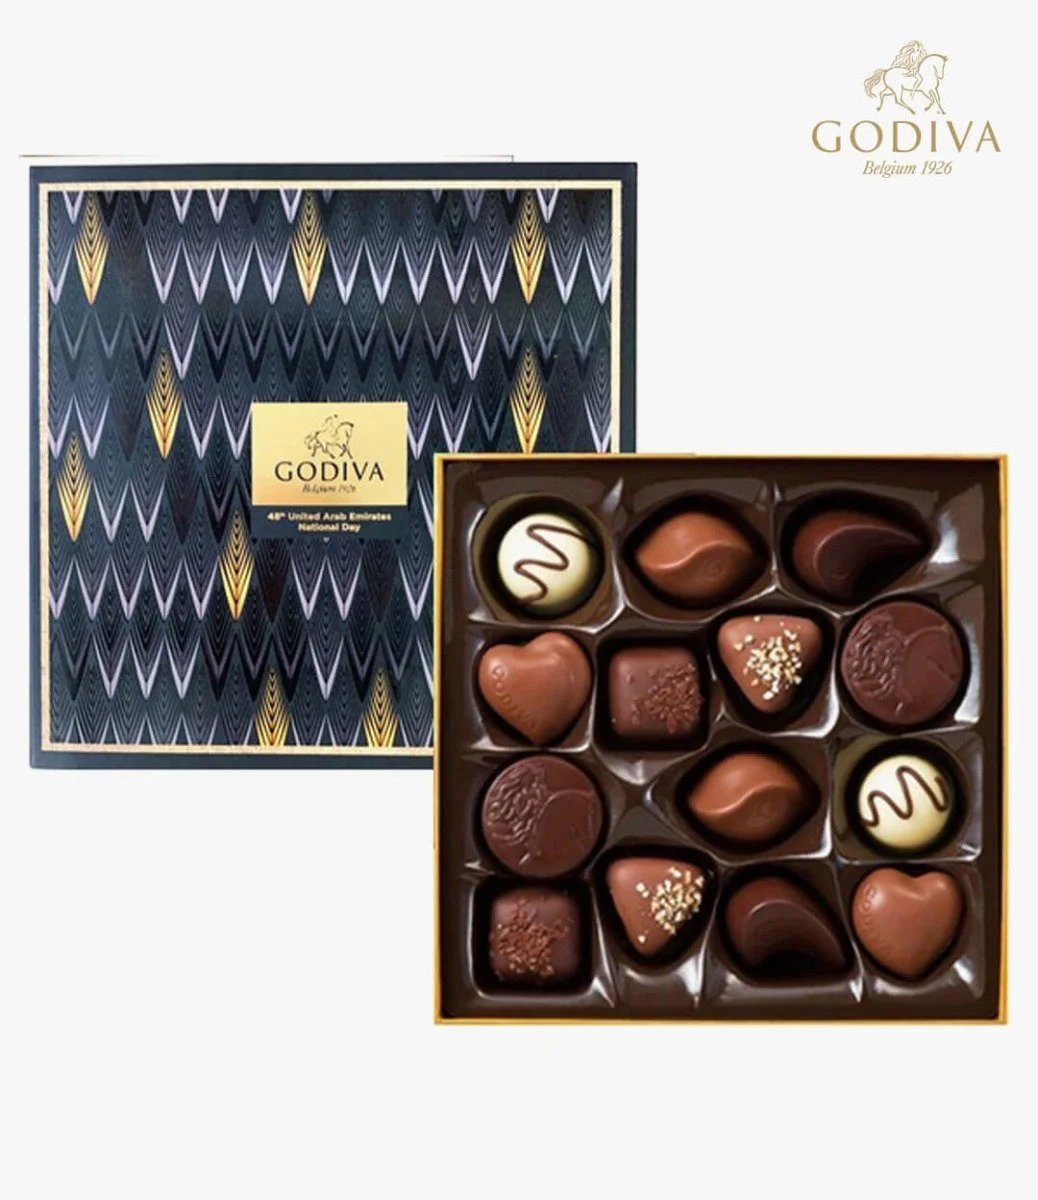 UAE National Day Gold Rigid Chocolate Box 14 pcs by Godiva 